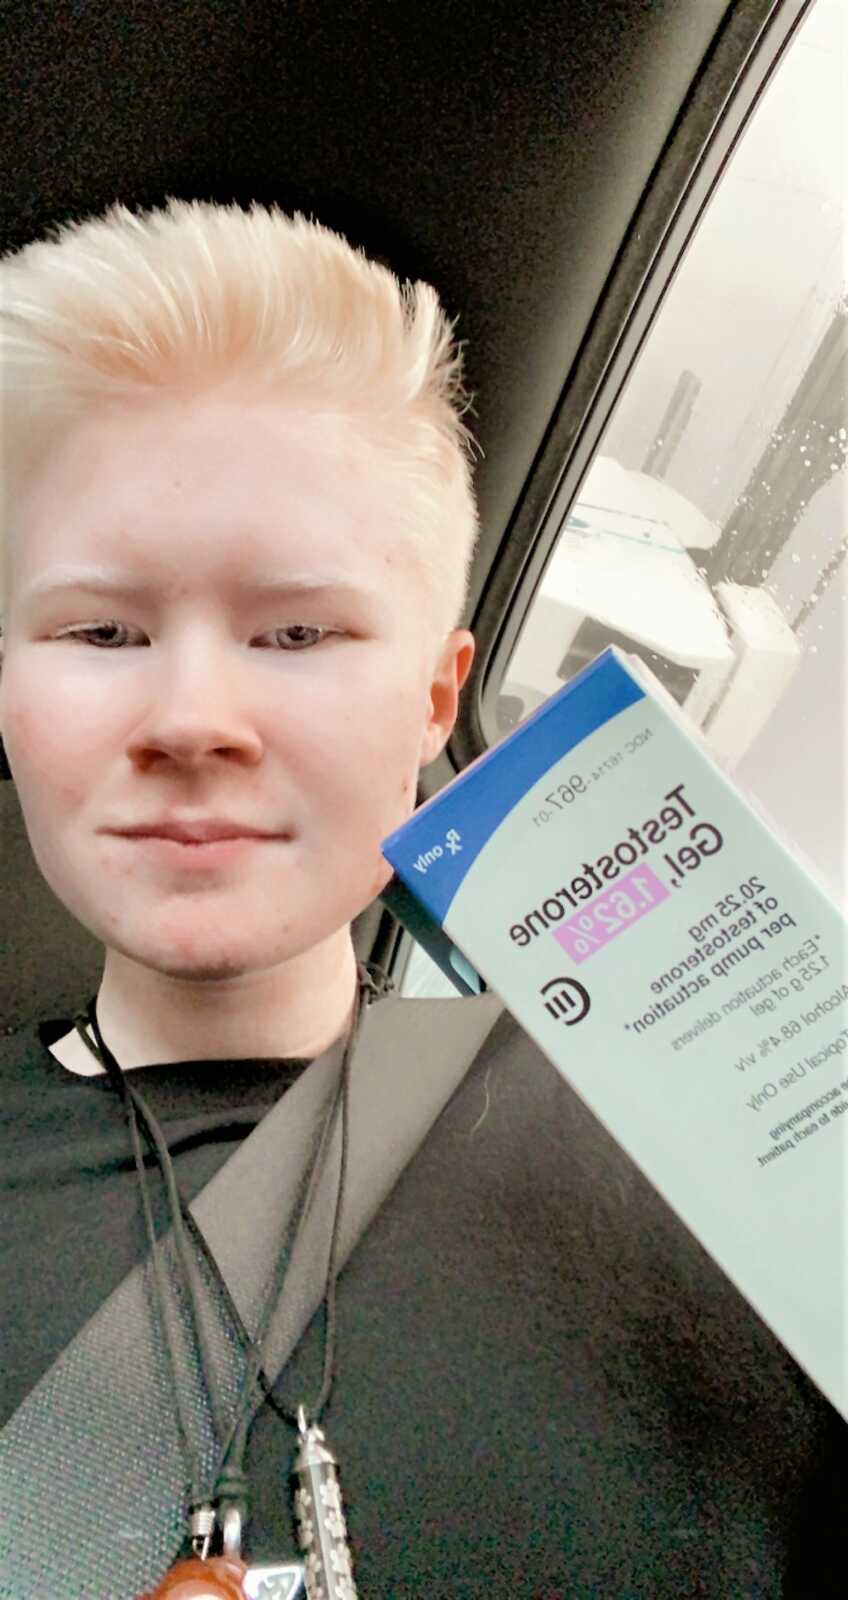 albino man taking testosterone to transition